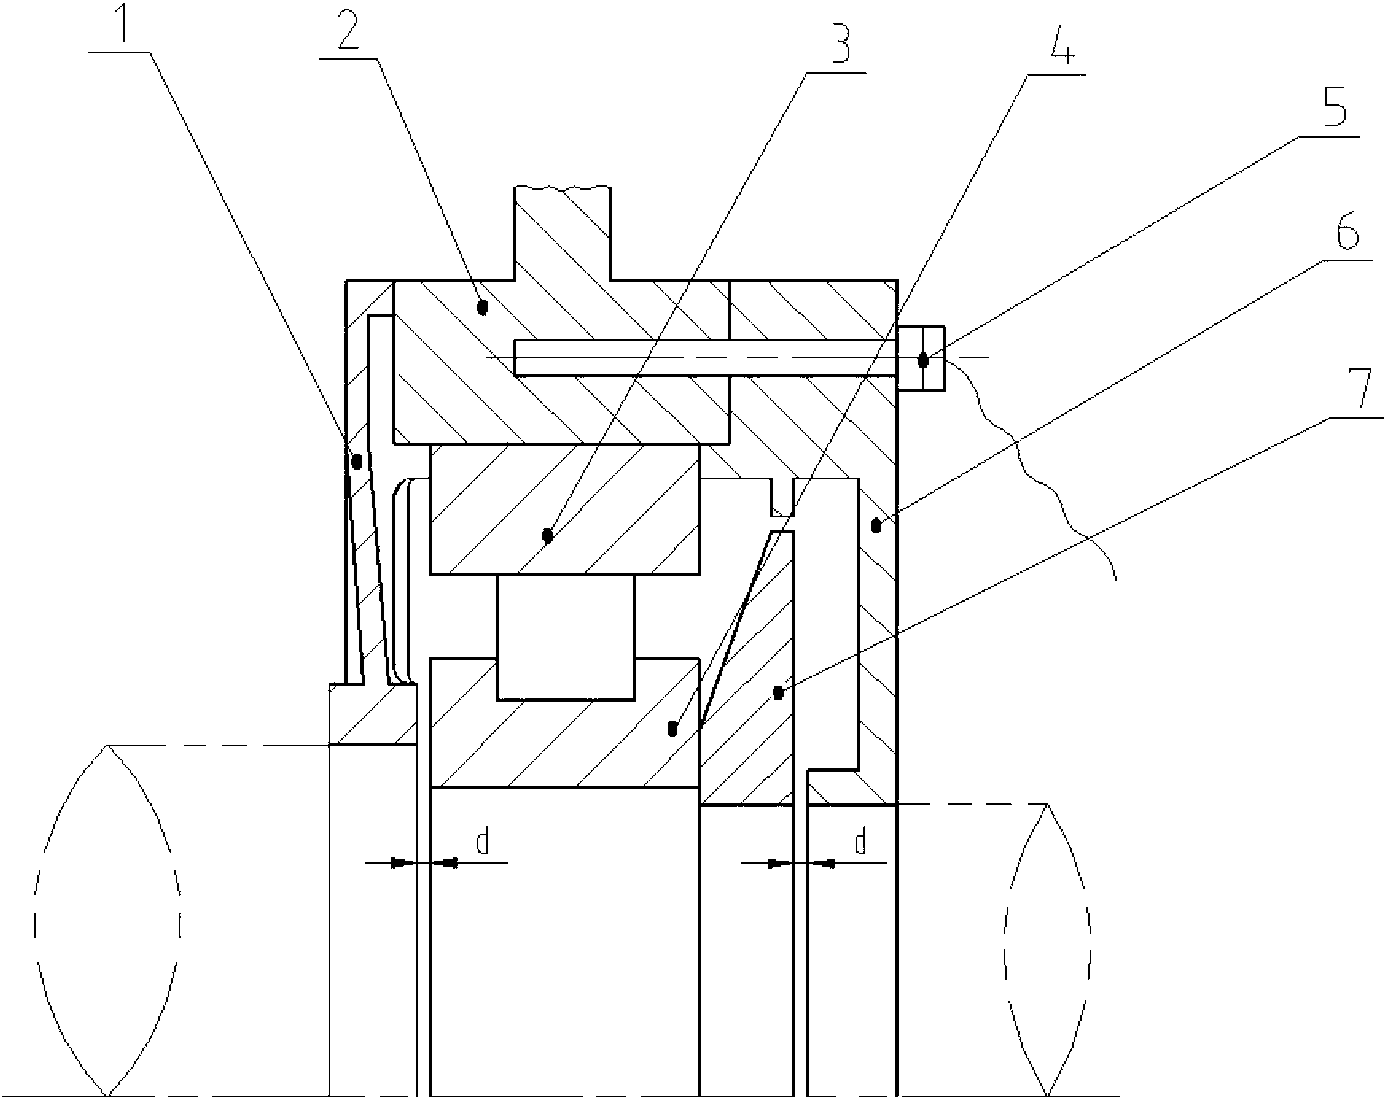 Pillar bearing assembly structure